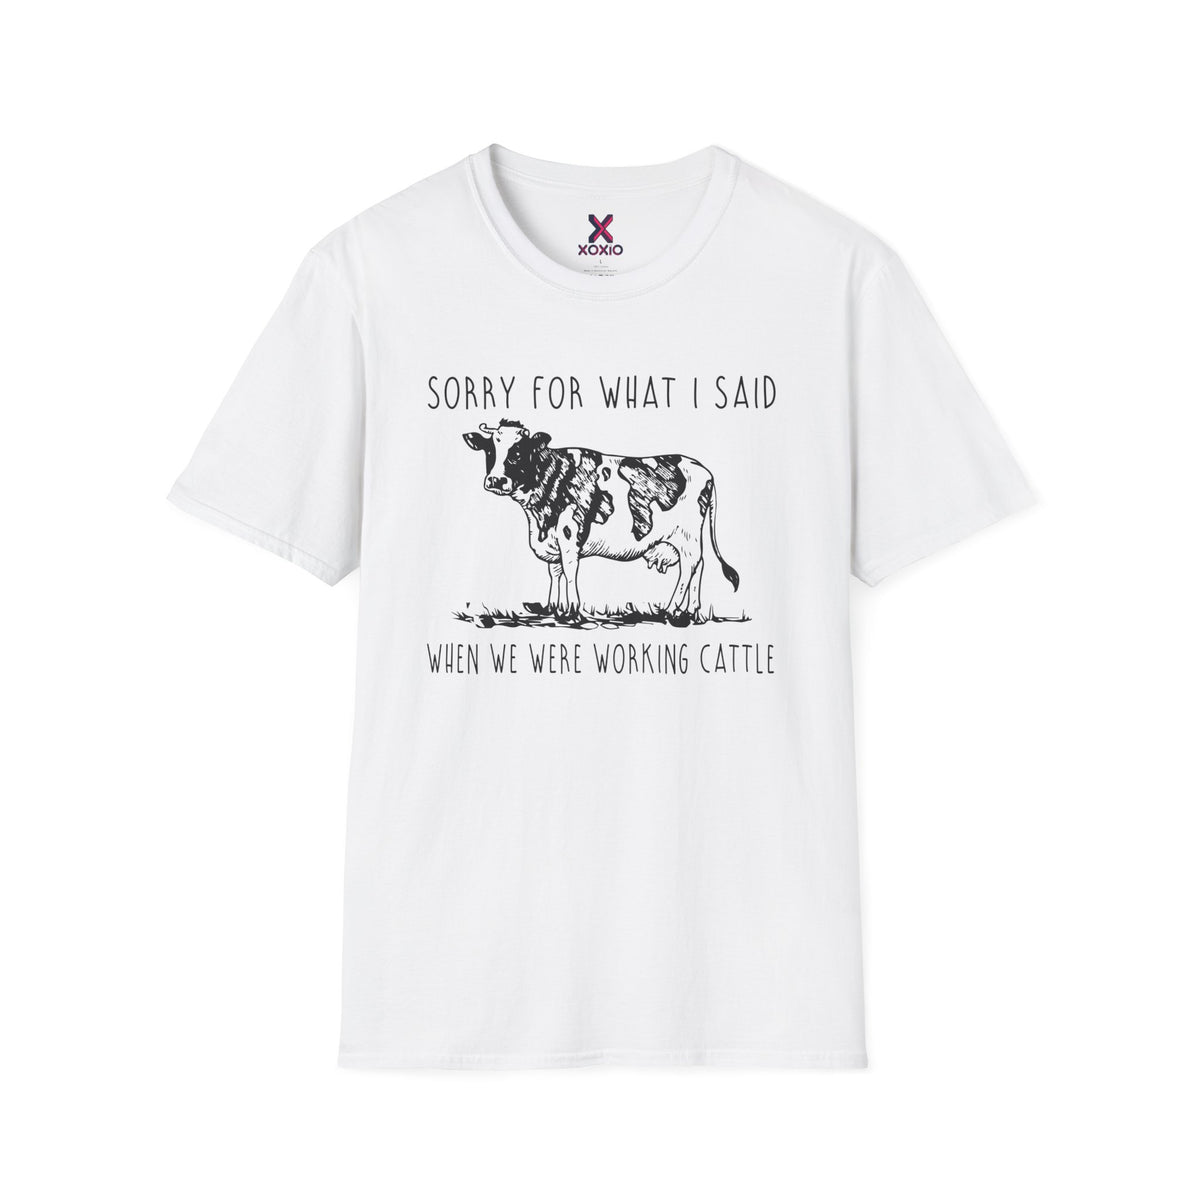 Cow Lover T-shirt / Cow Addict T-shirt